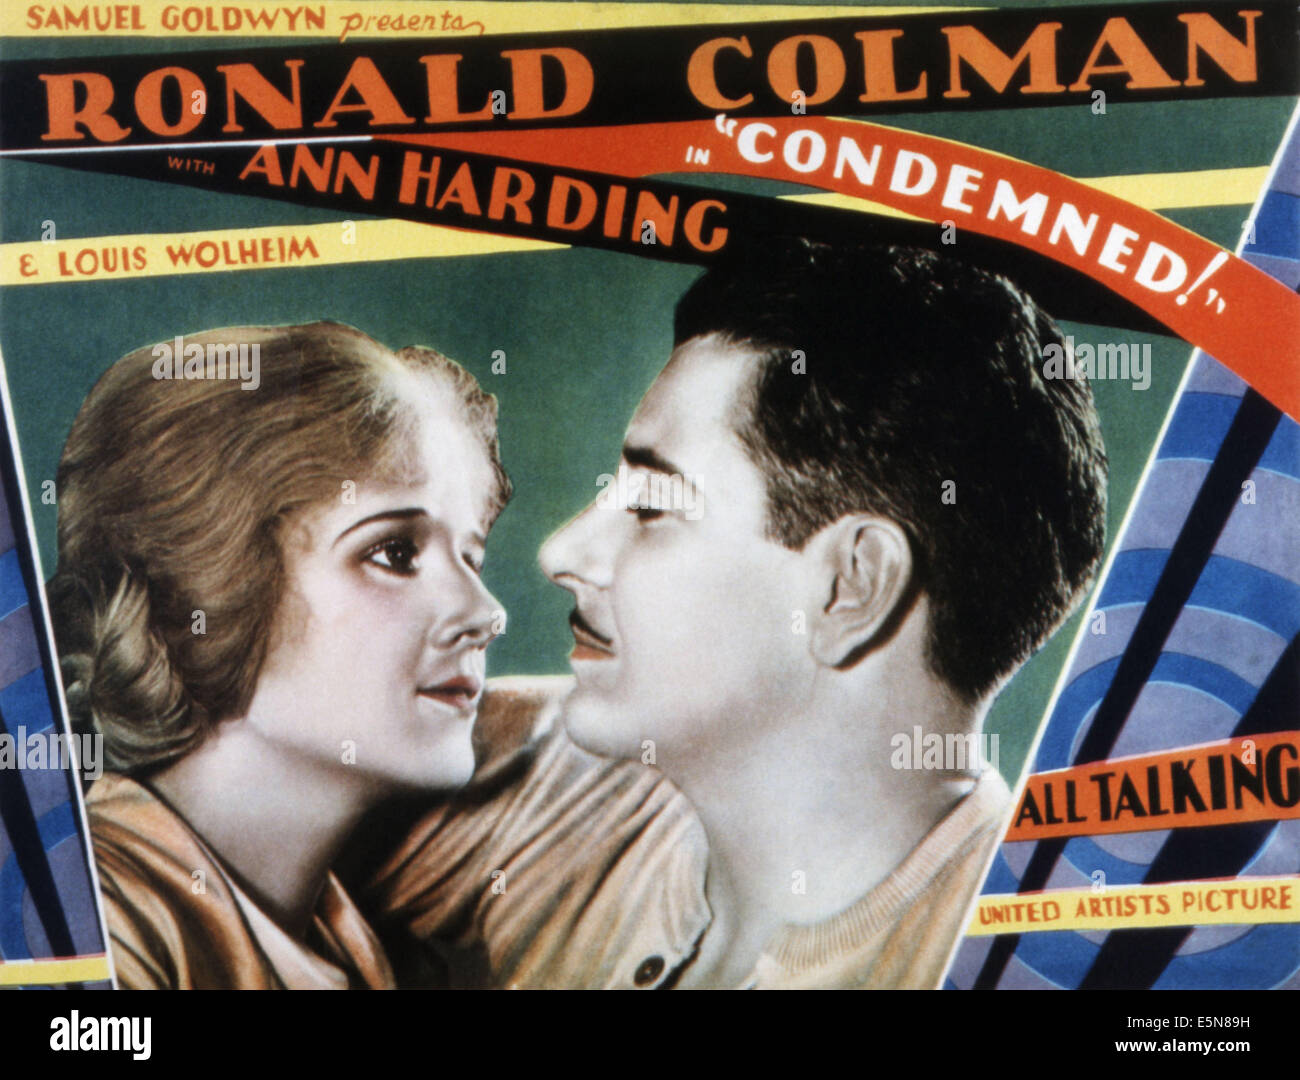 CONDEMNED, Ann Harding, Ronald Colman, 1929 Stock Photo